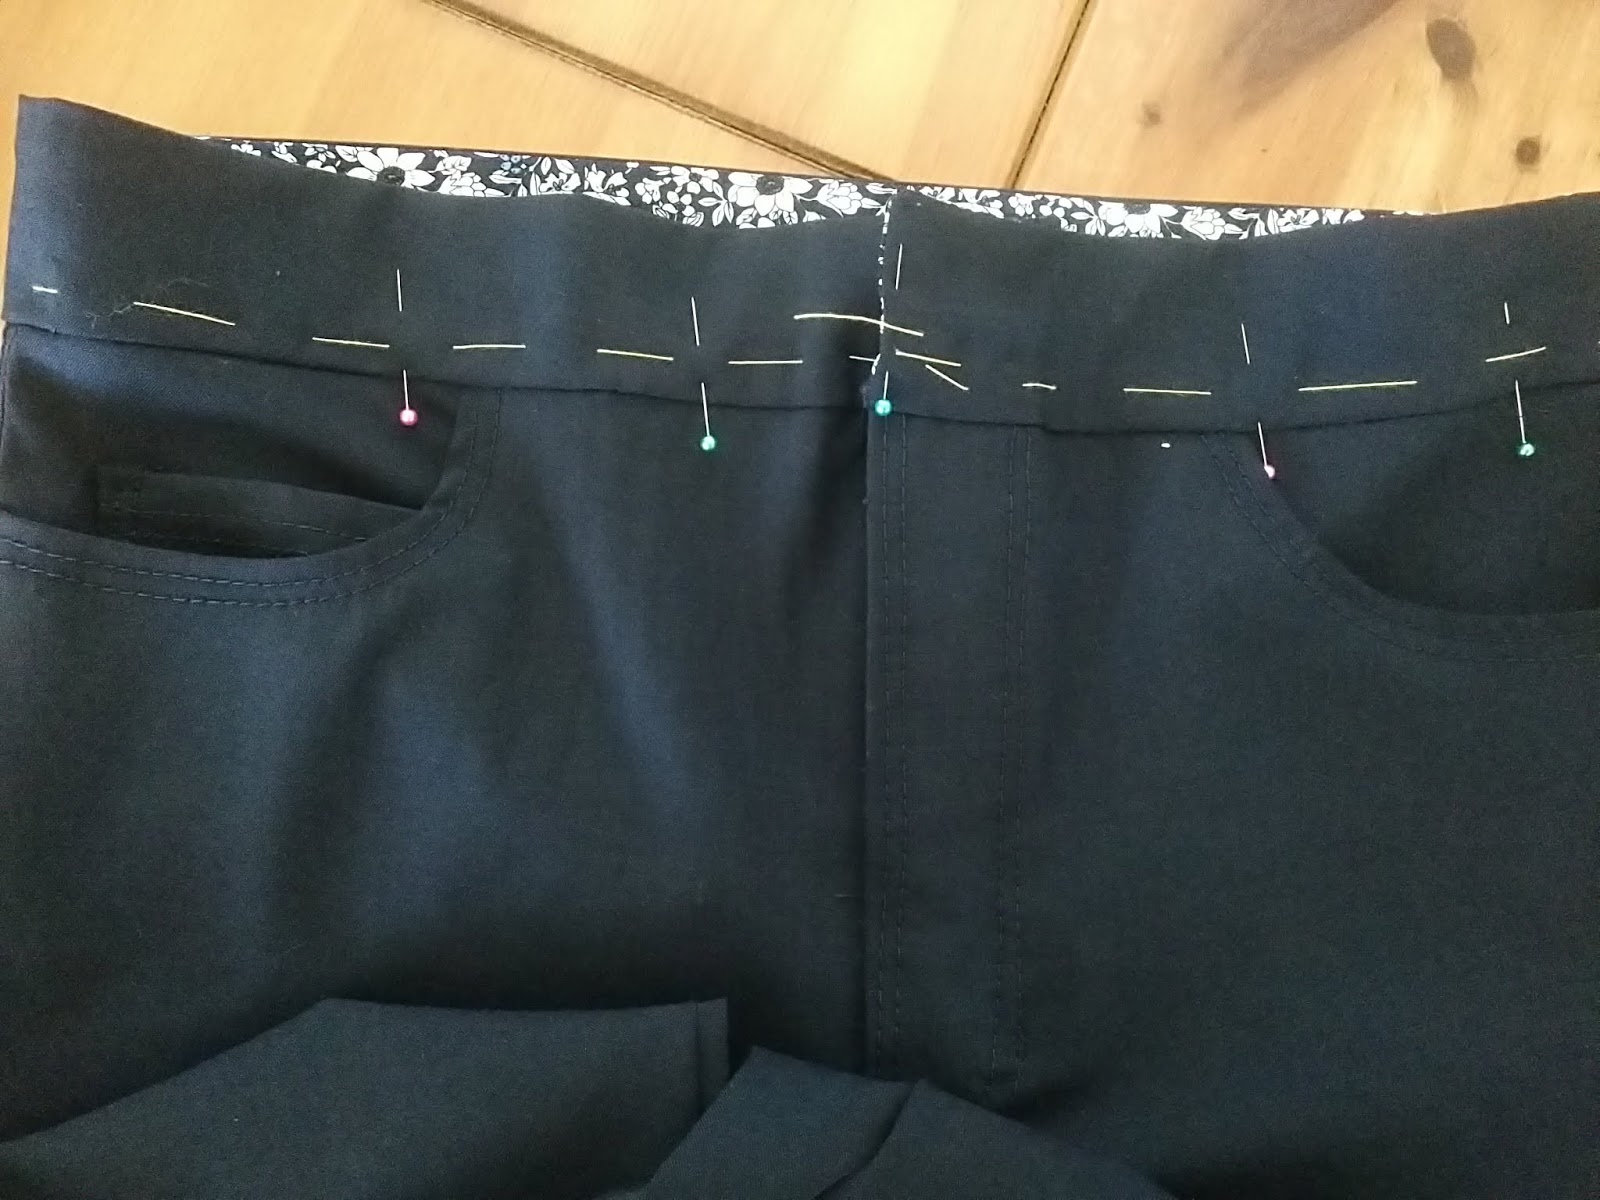 #SewAngelicThreads: How to sew Jeans